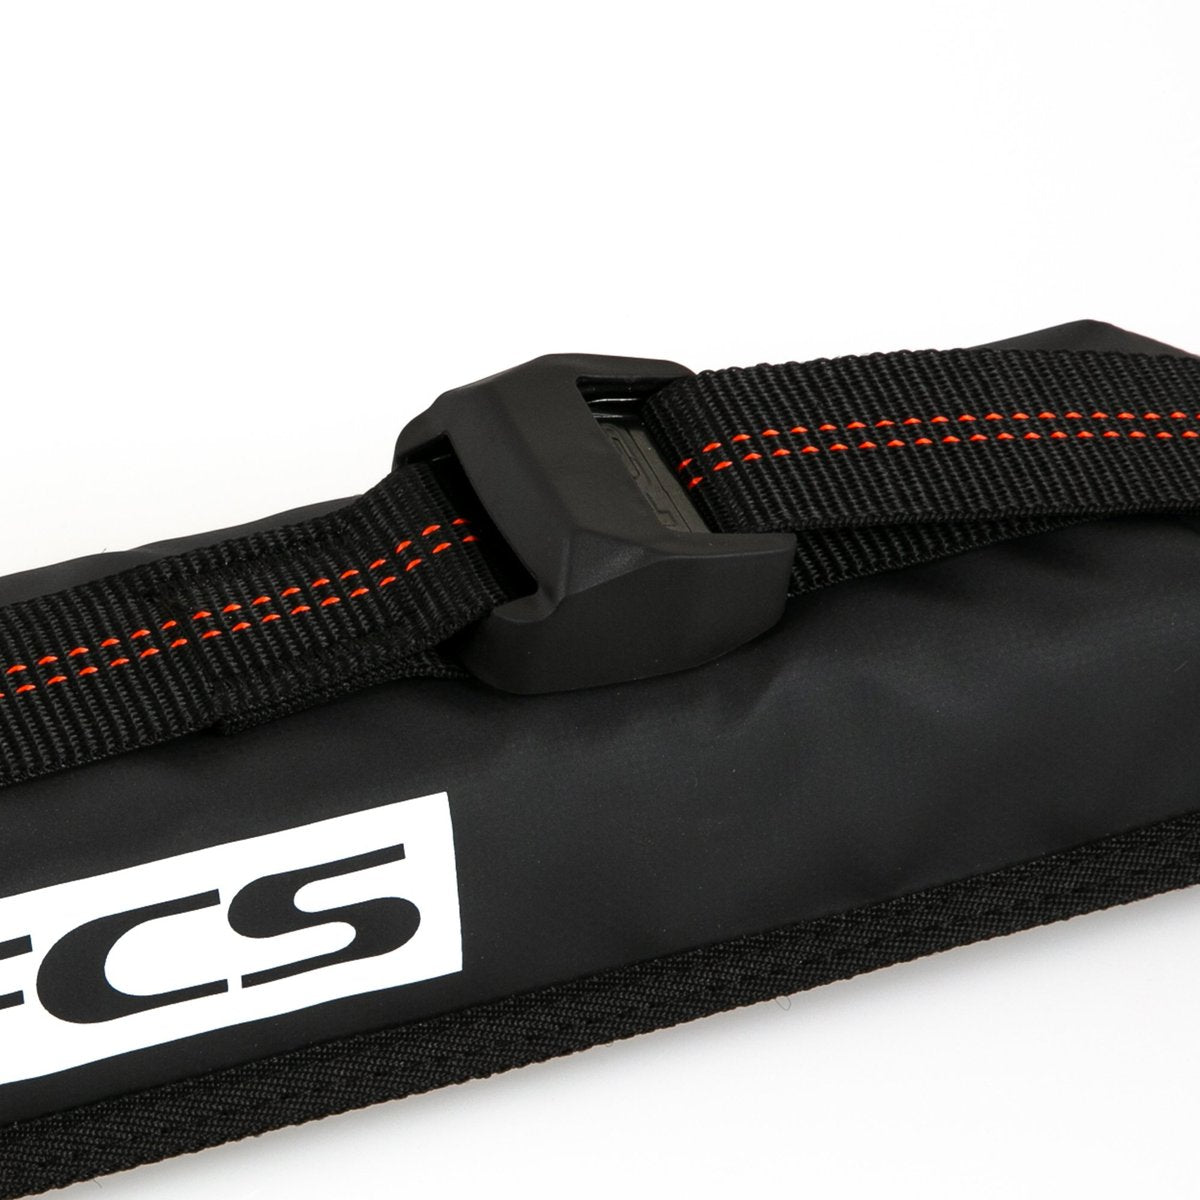 
                  
                    Tie Downs / Straps - FCS Cam Lock Soft Racks Single
                  
                